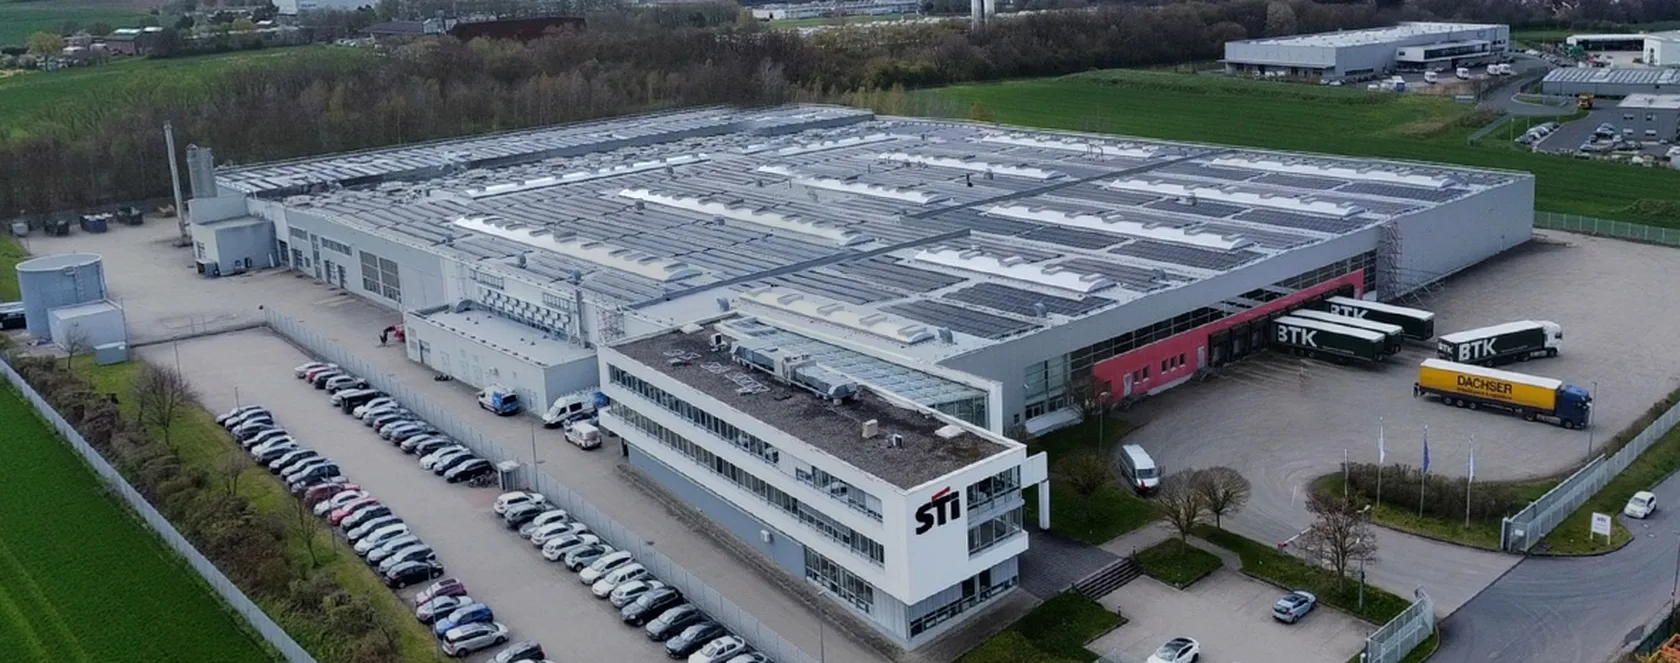 sti group solarpanels produktionsstandort alsfeld